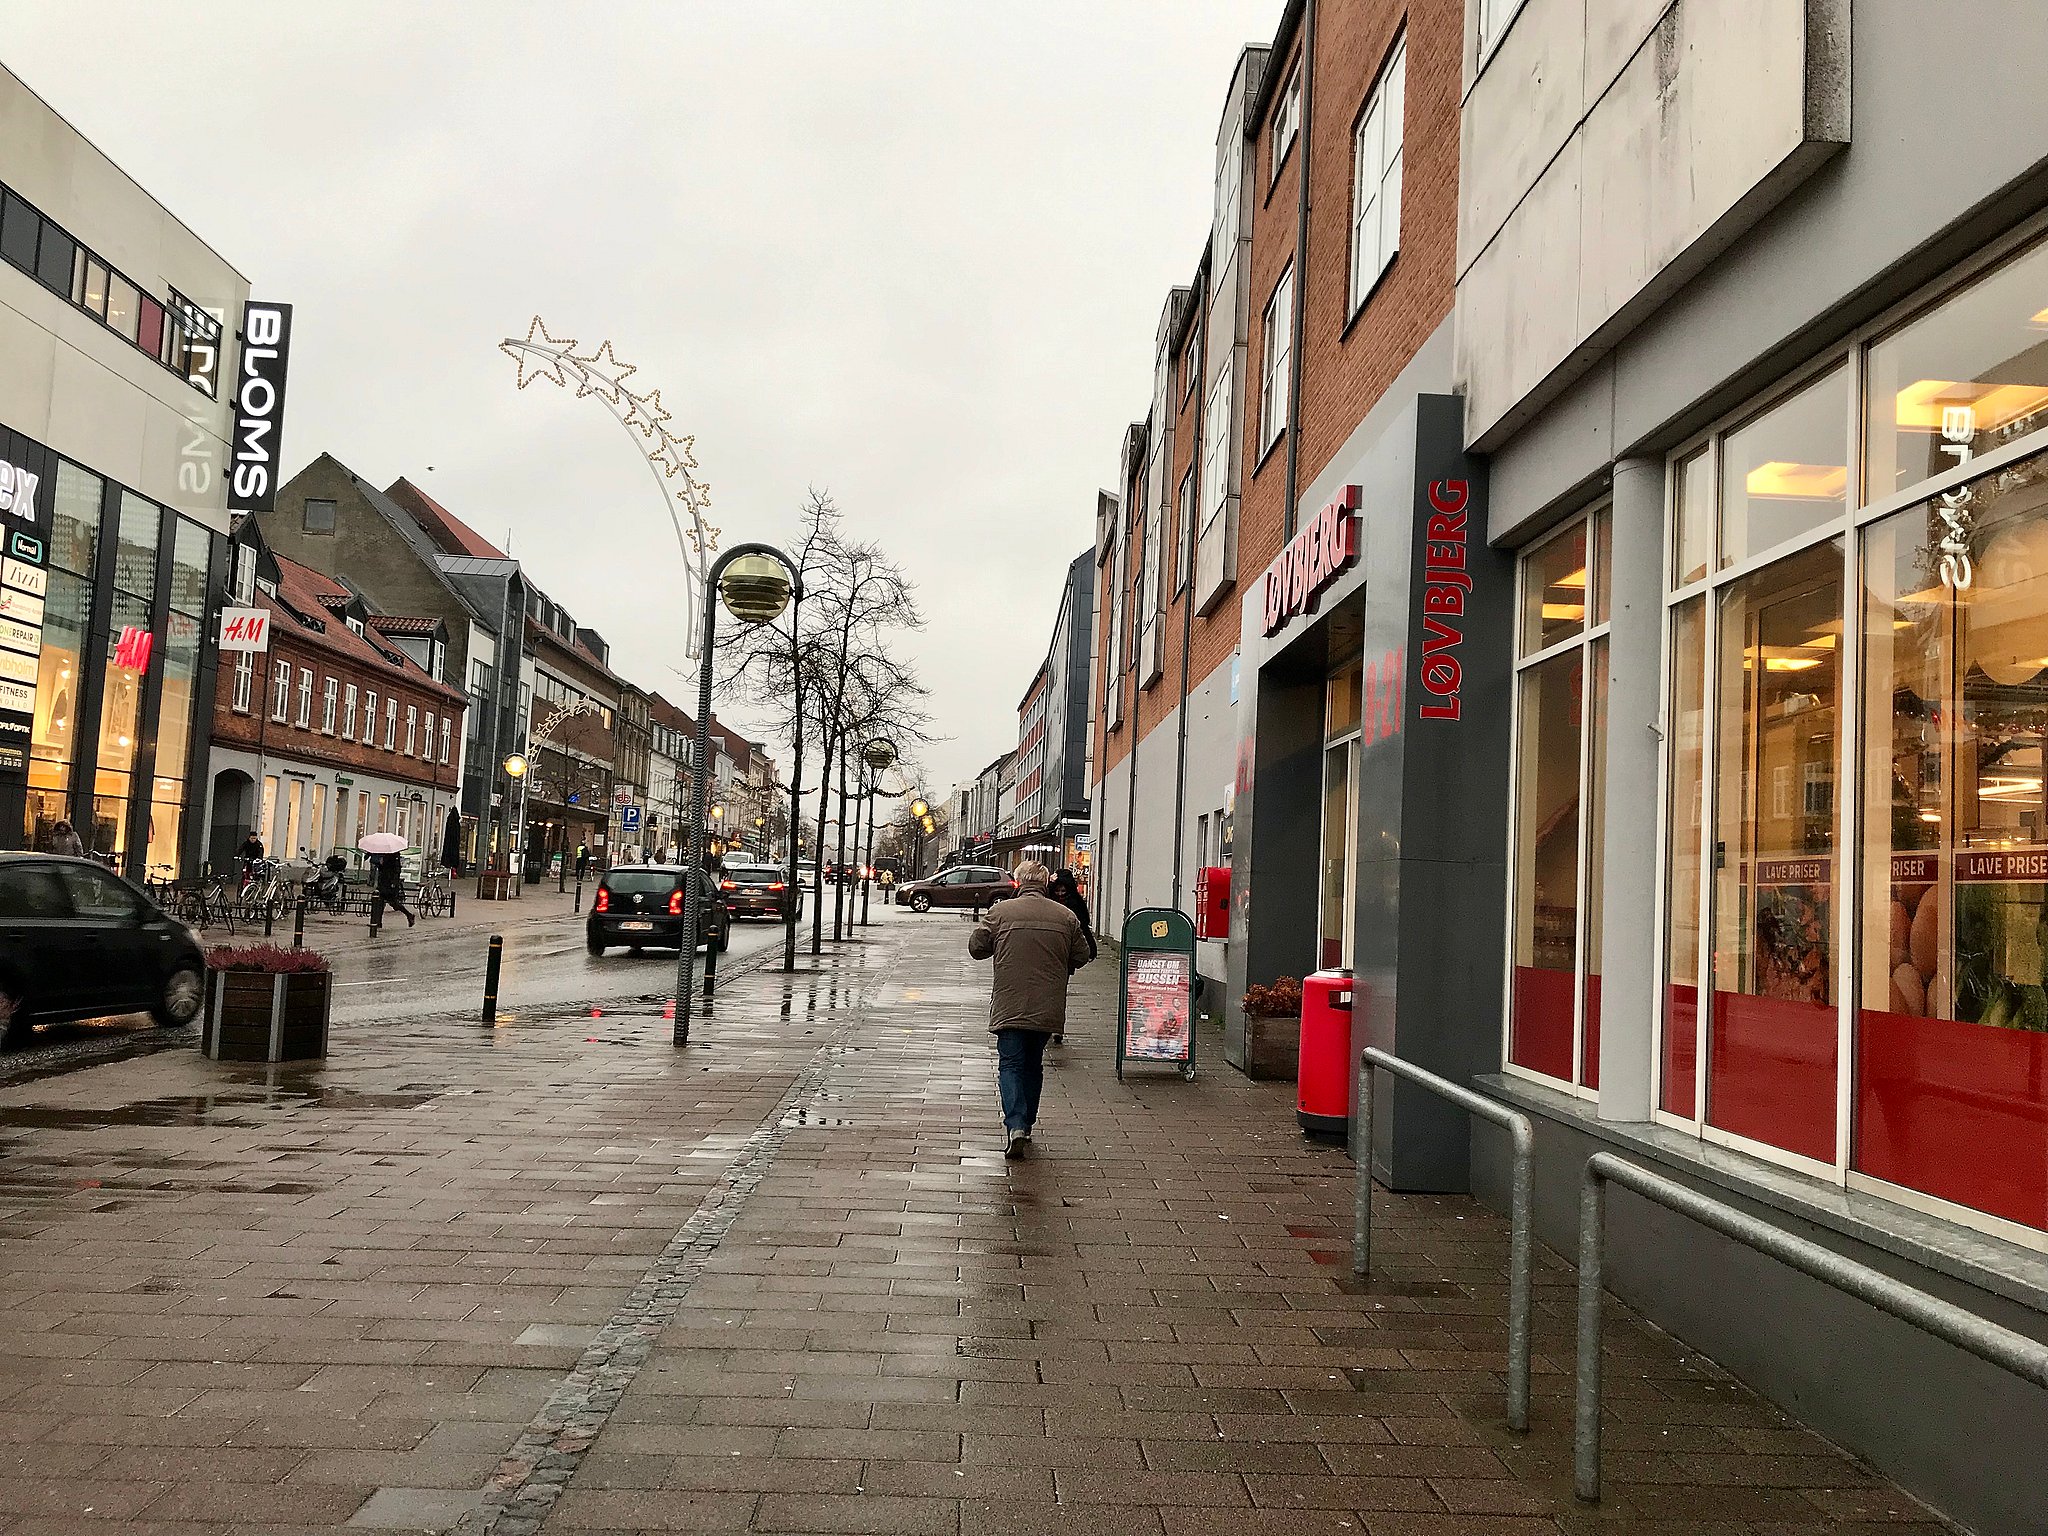 Garderobe Gør gulvet rent mister temperamentet Historisk købmandsbutik lukker og slukker | TV2 Østjylland